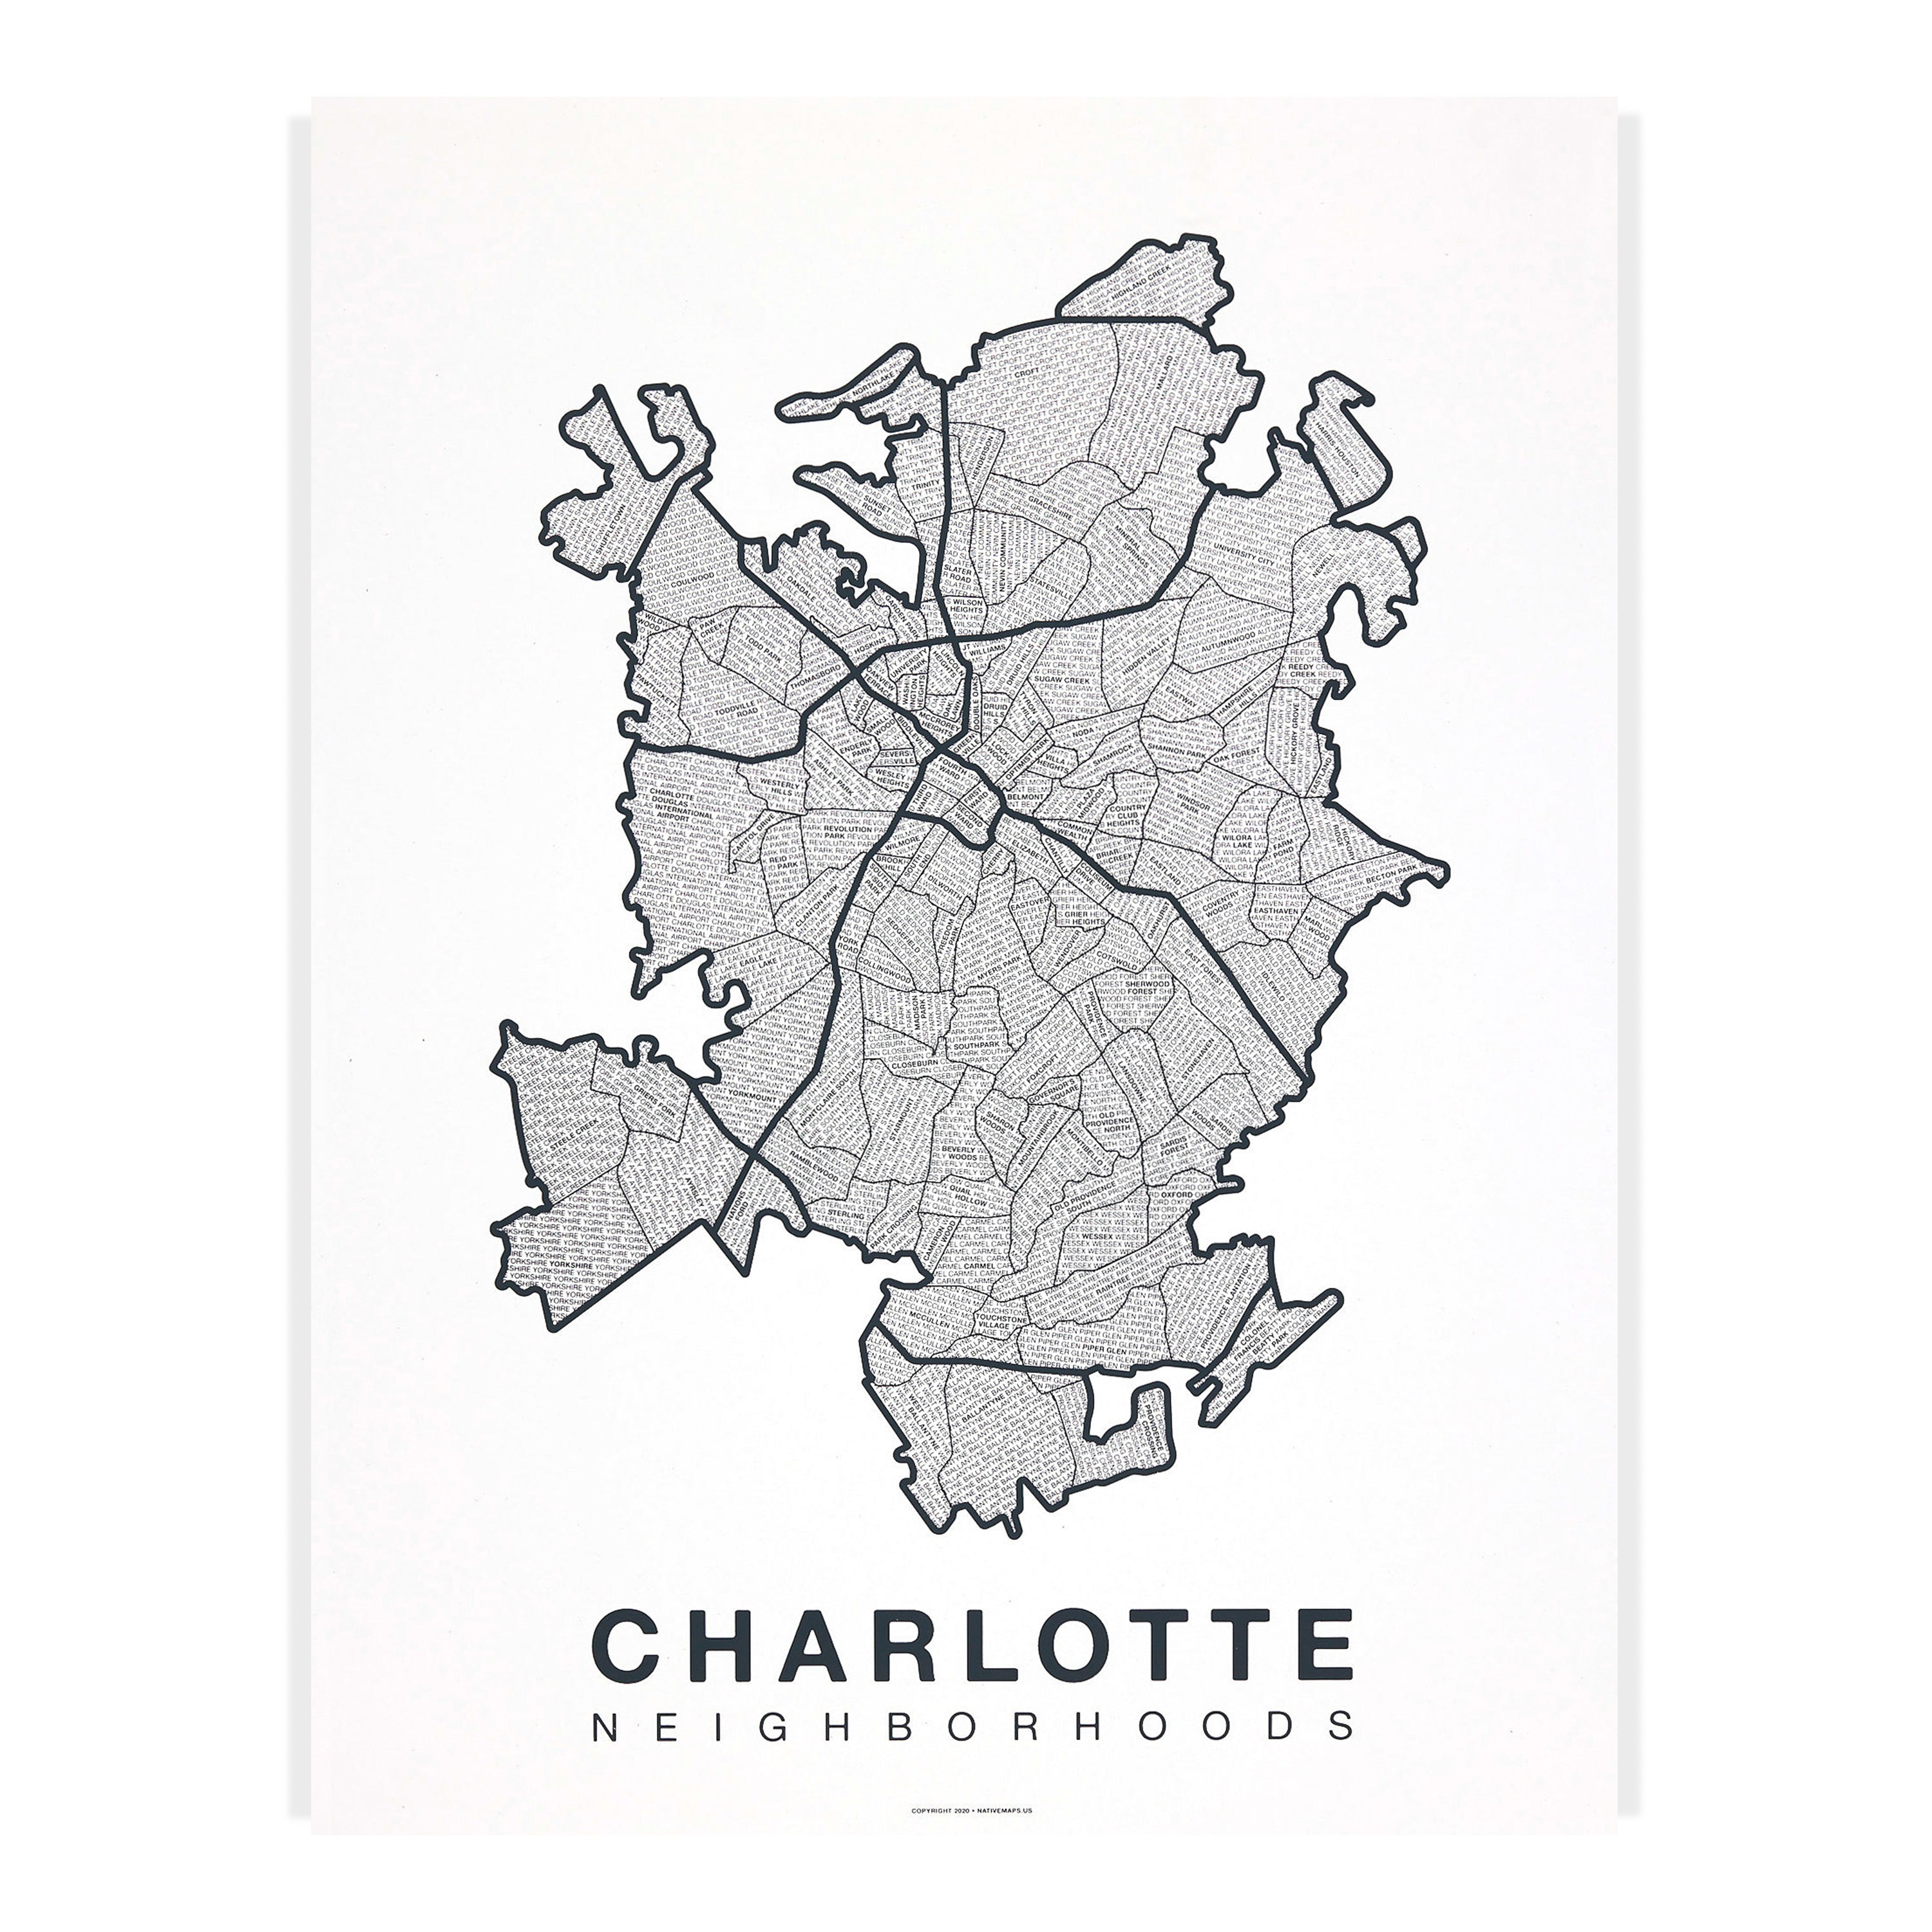 Shopping Guide for Charlotte, Shopping in Charlotte